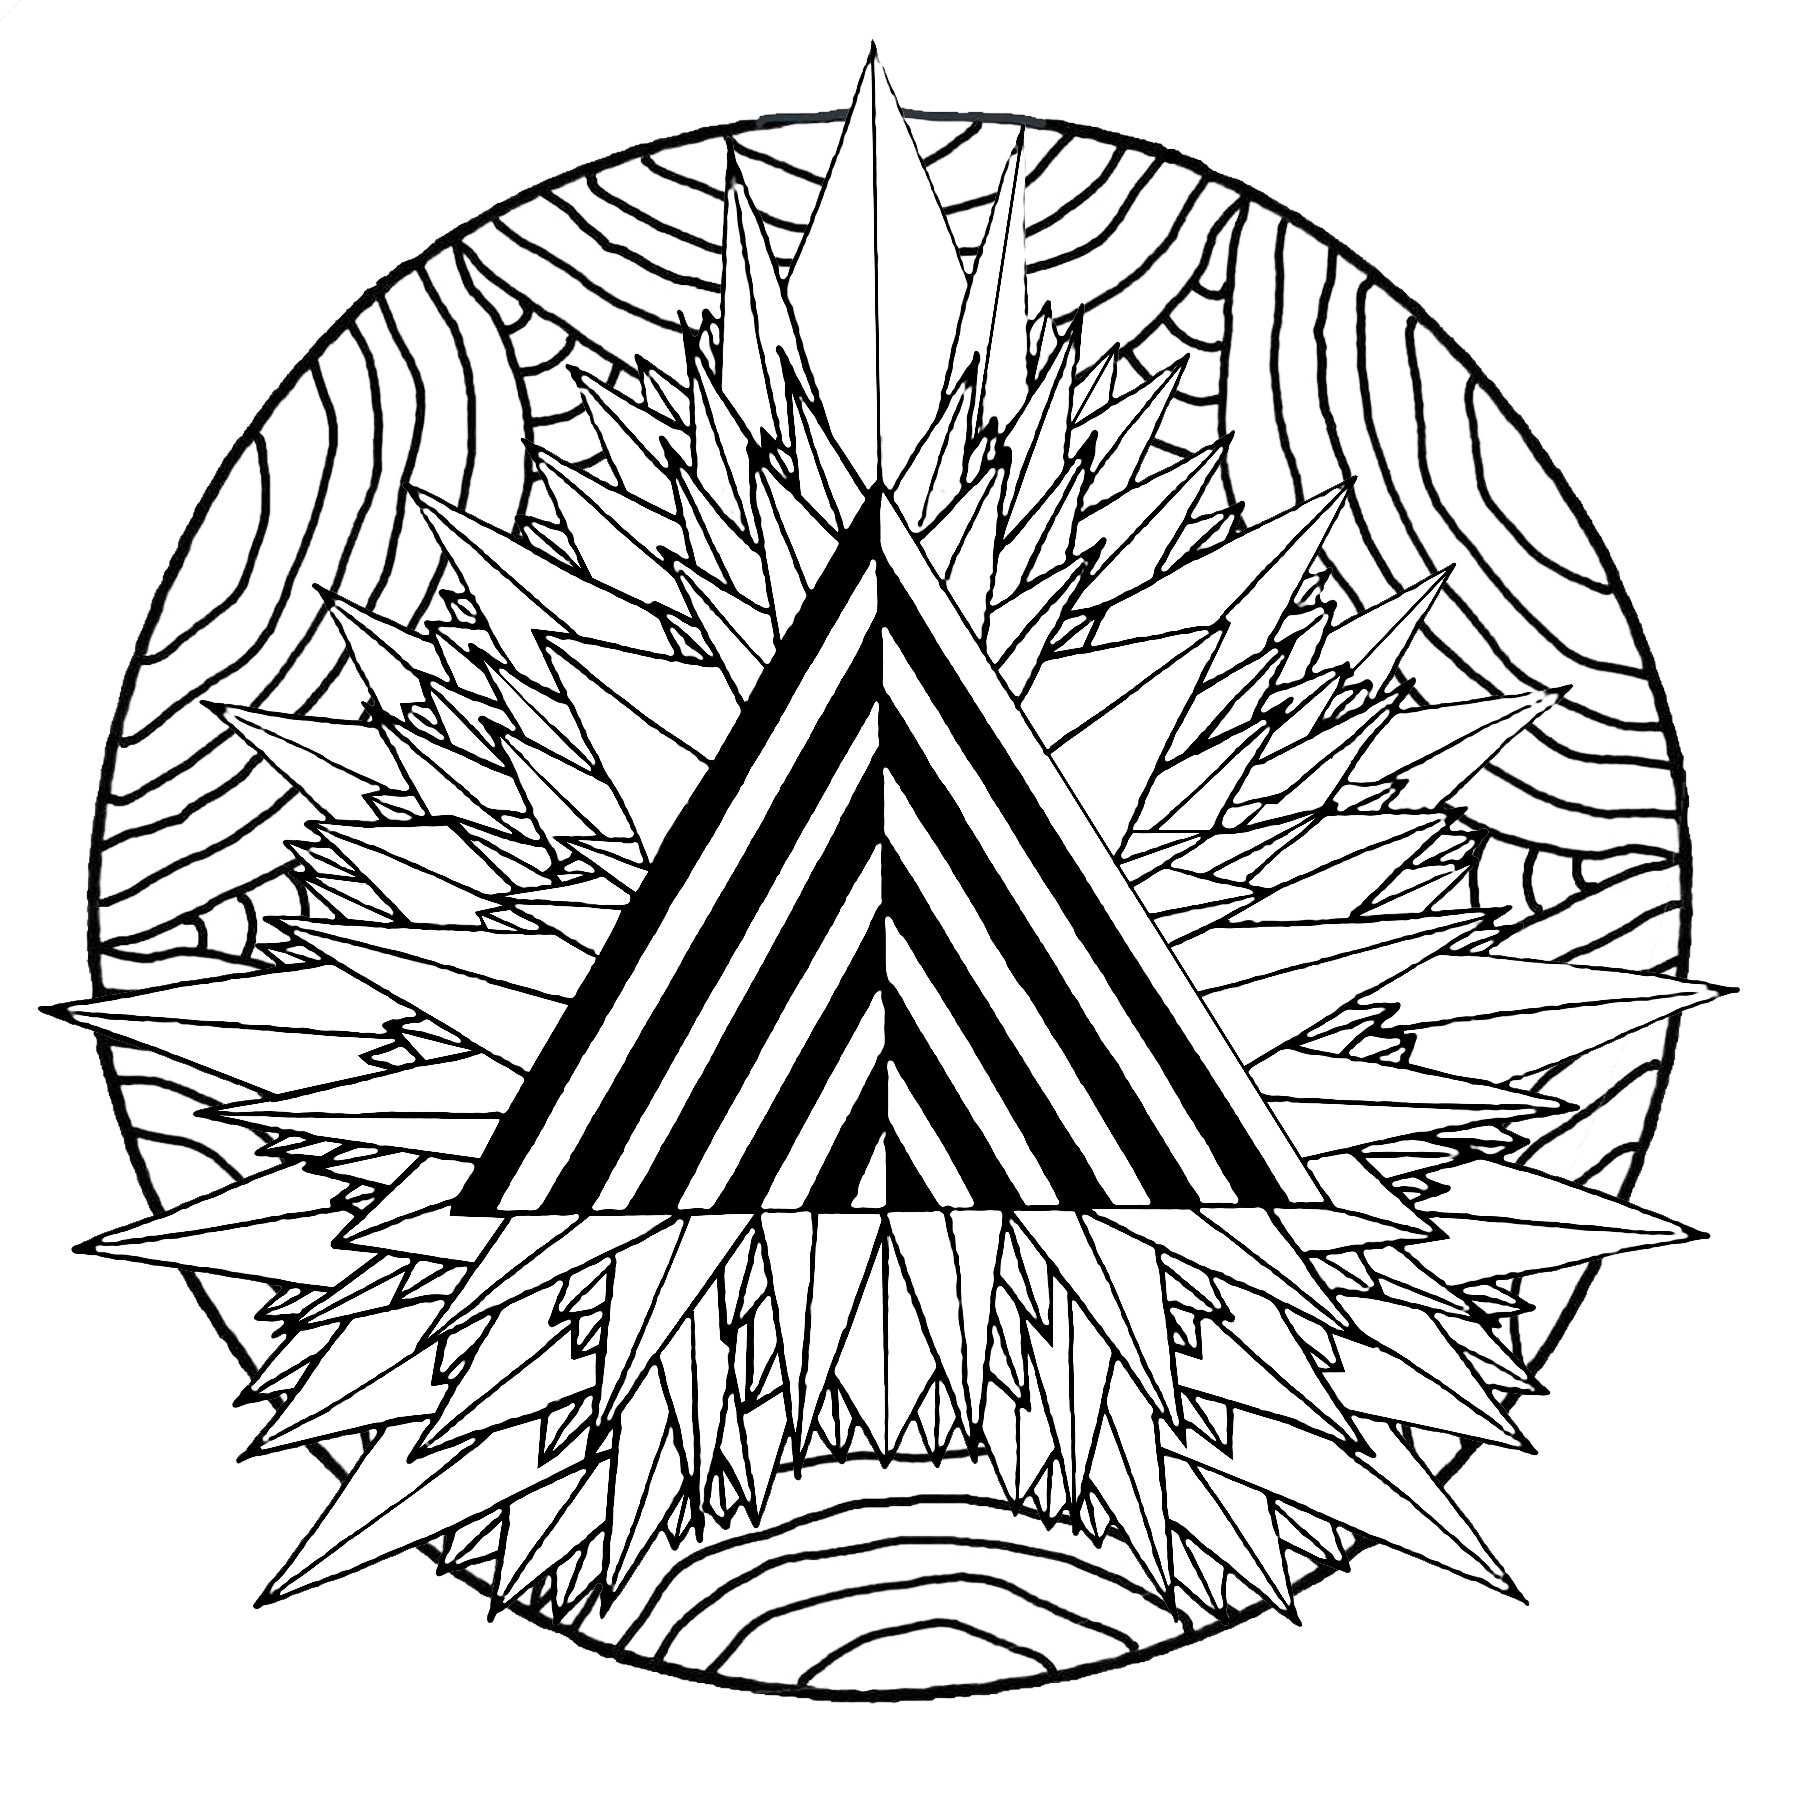 Mandala triangular mística